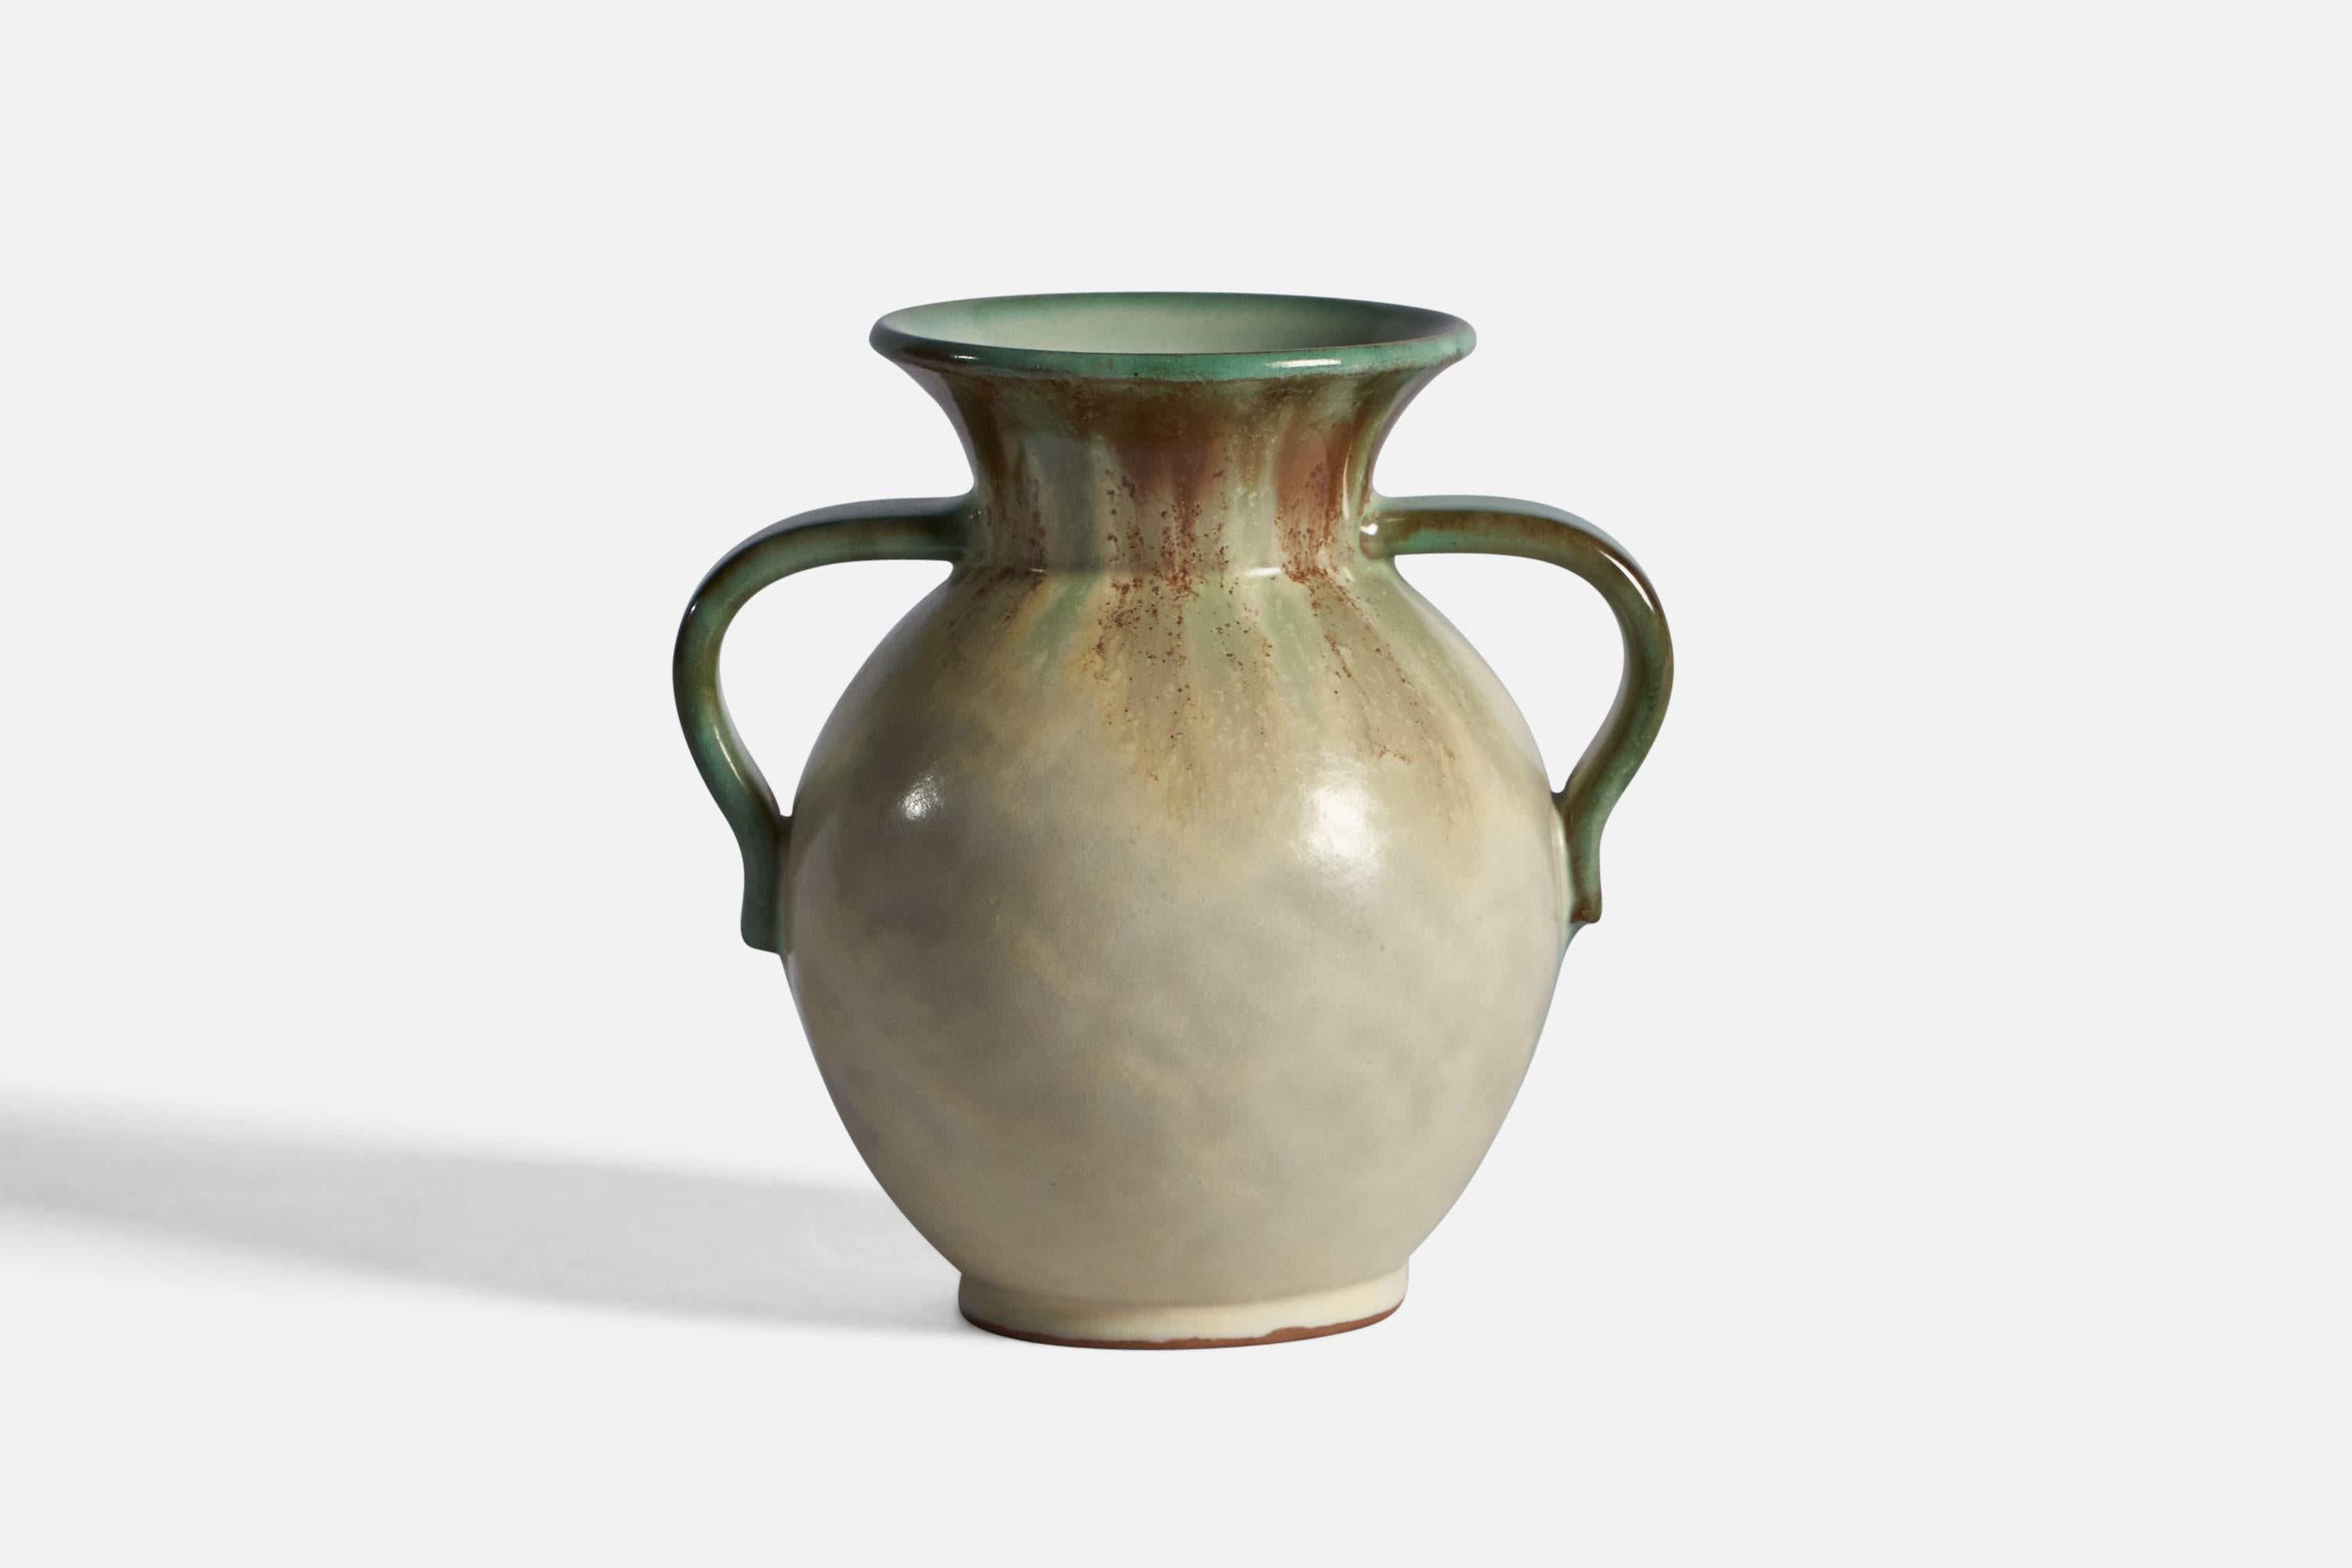 A green and beige-glazed earthenware vase, designed by Christer Heijl and produced by Töreboda Keramik, Sweden, 1940s.